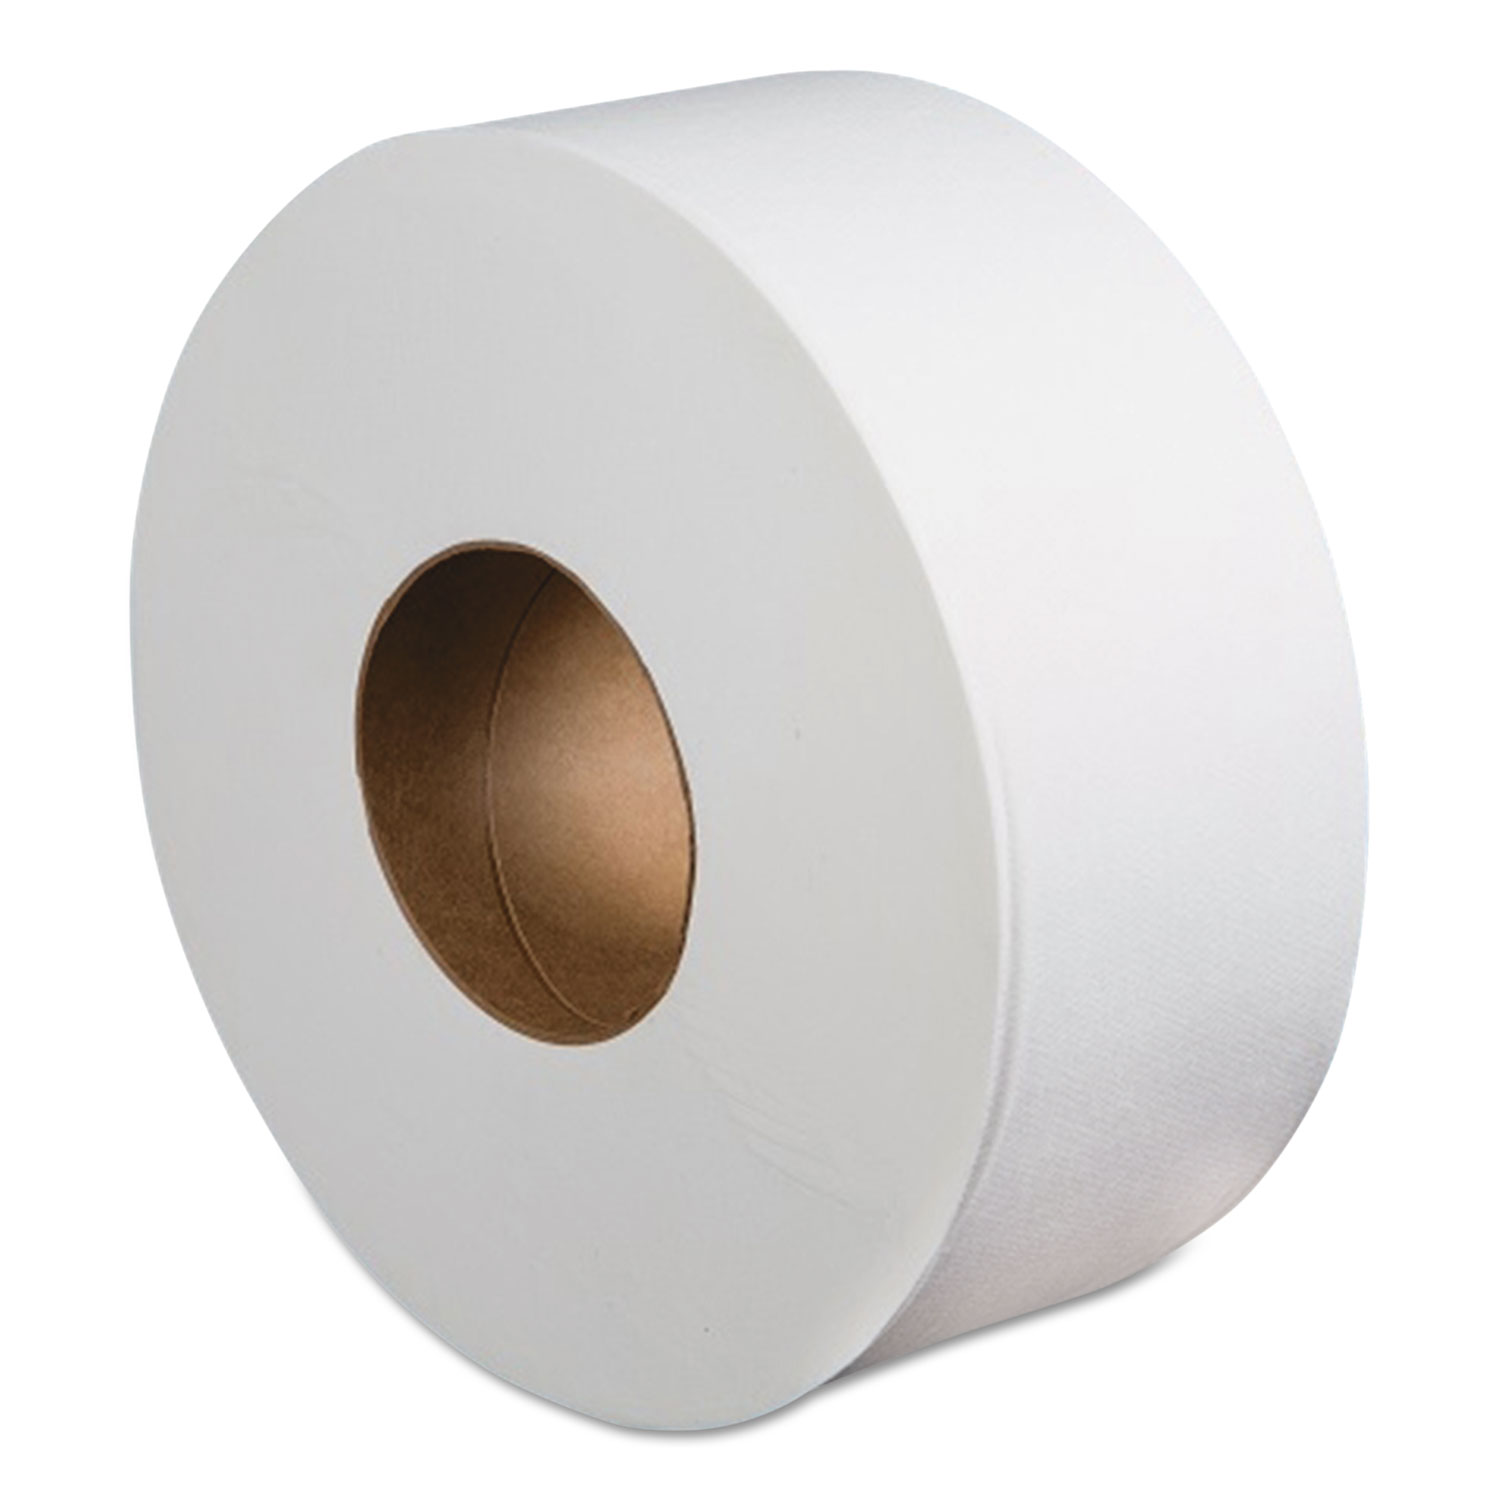 Jumbo Roll Bathroom Tissue, 2-Ply, White, 3.4